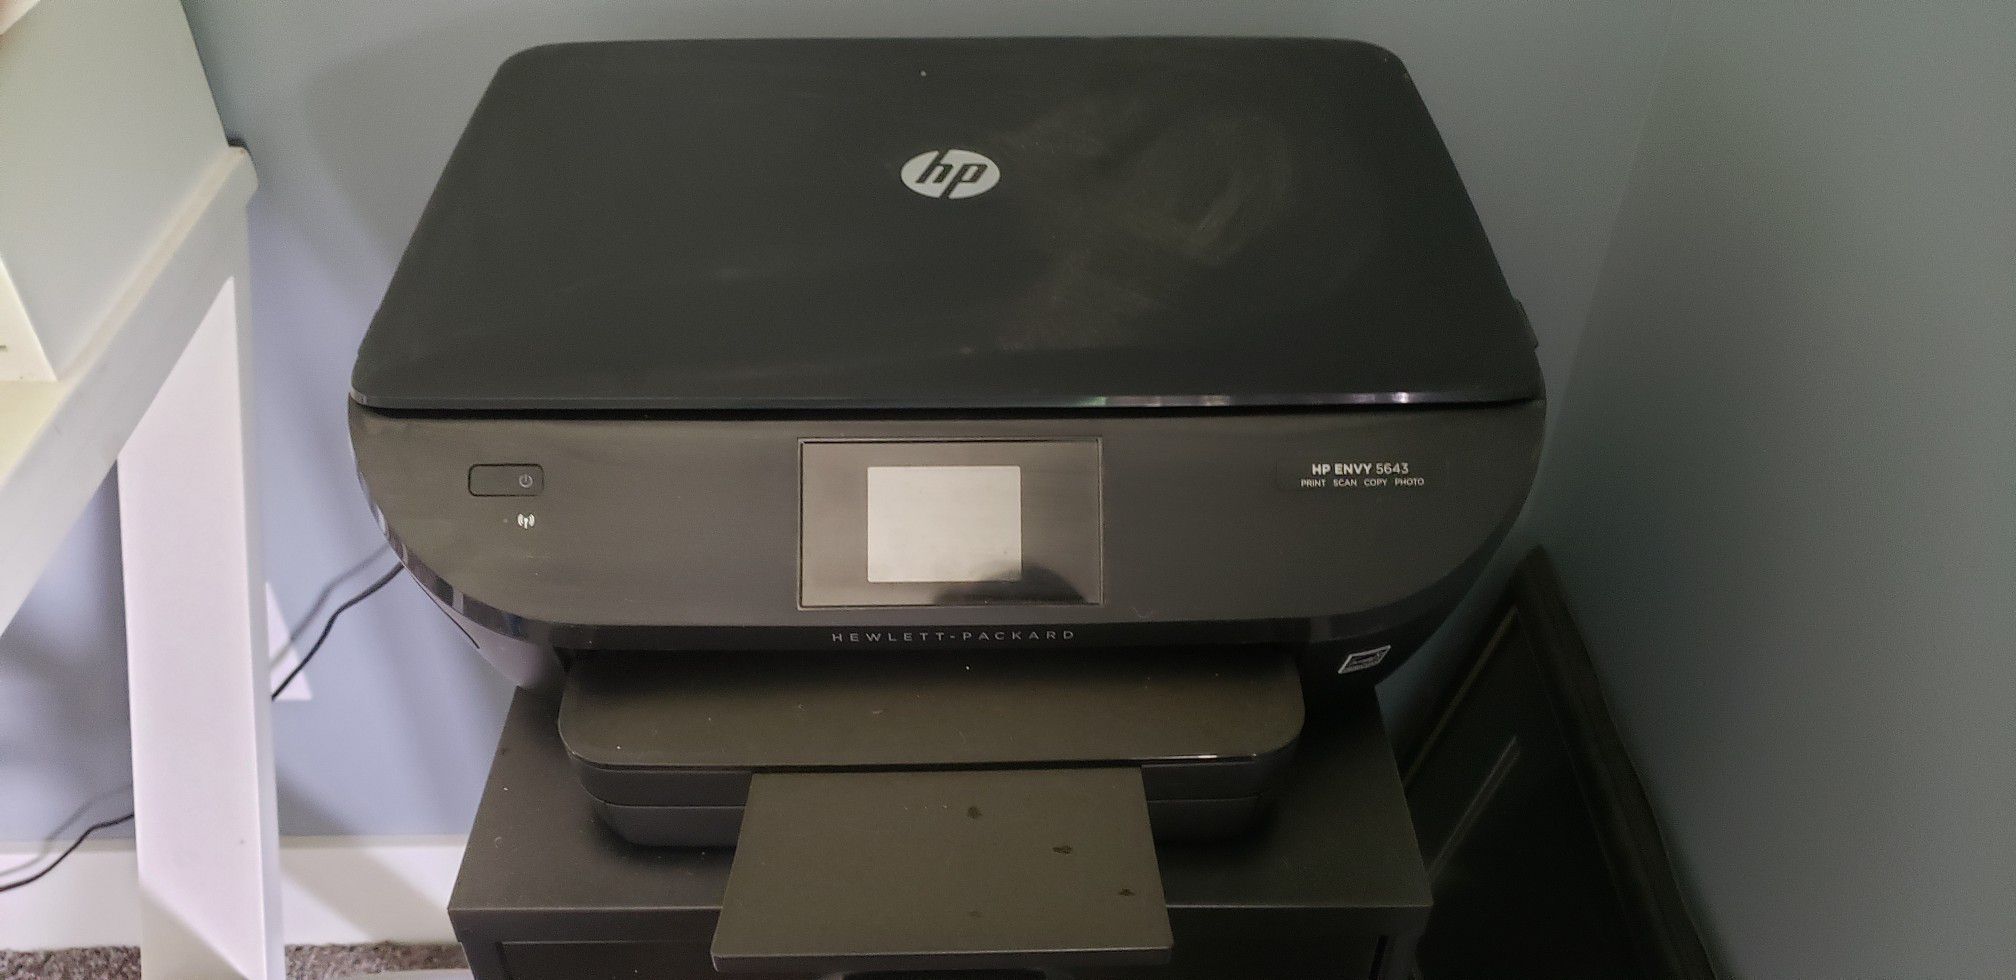 HP 5643 print scan copy photo